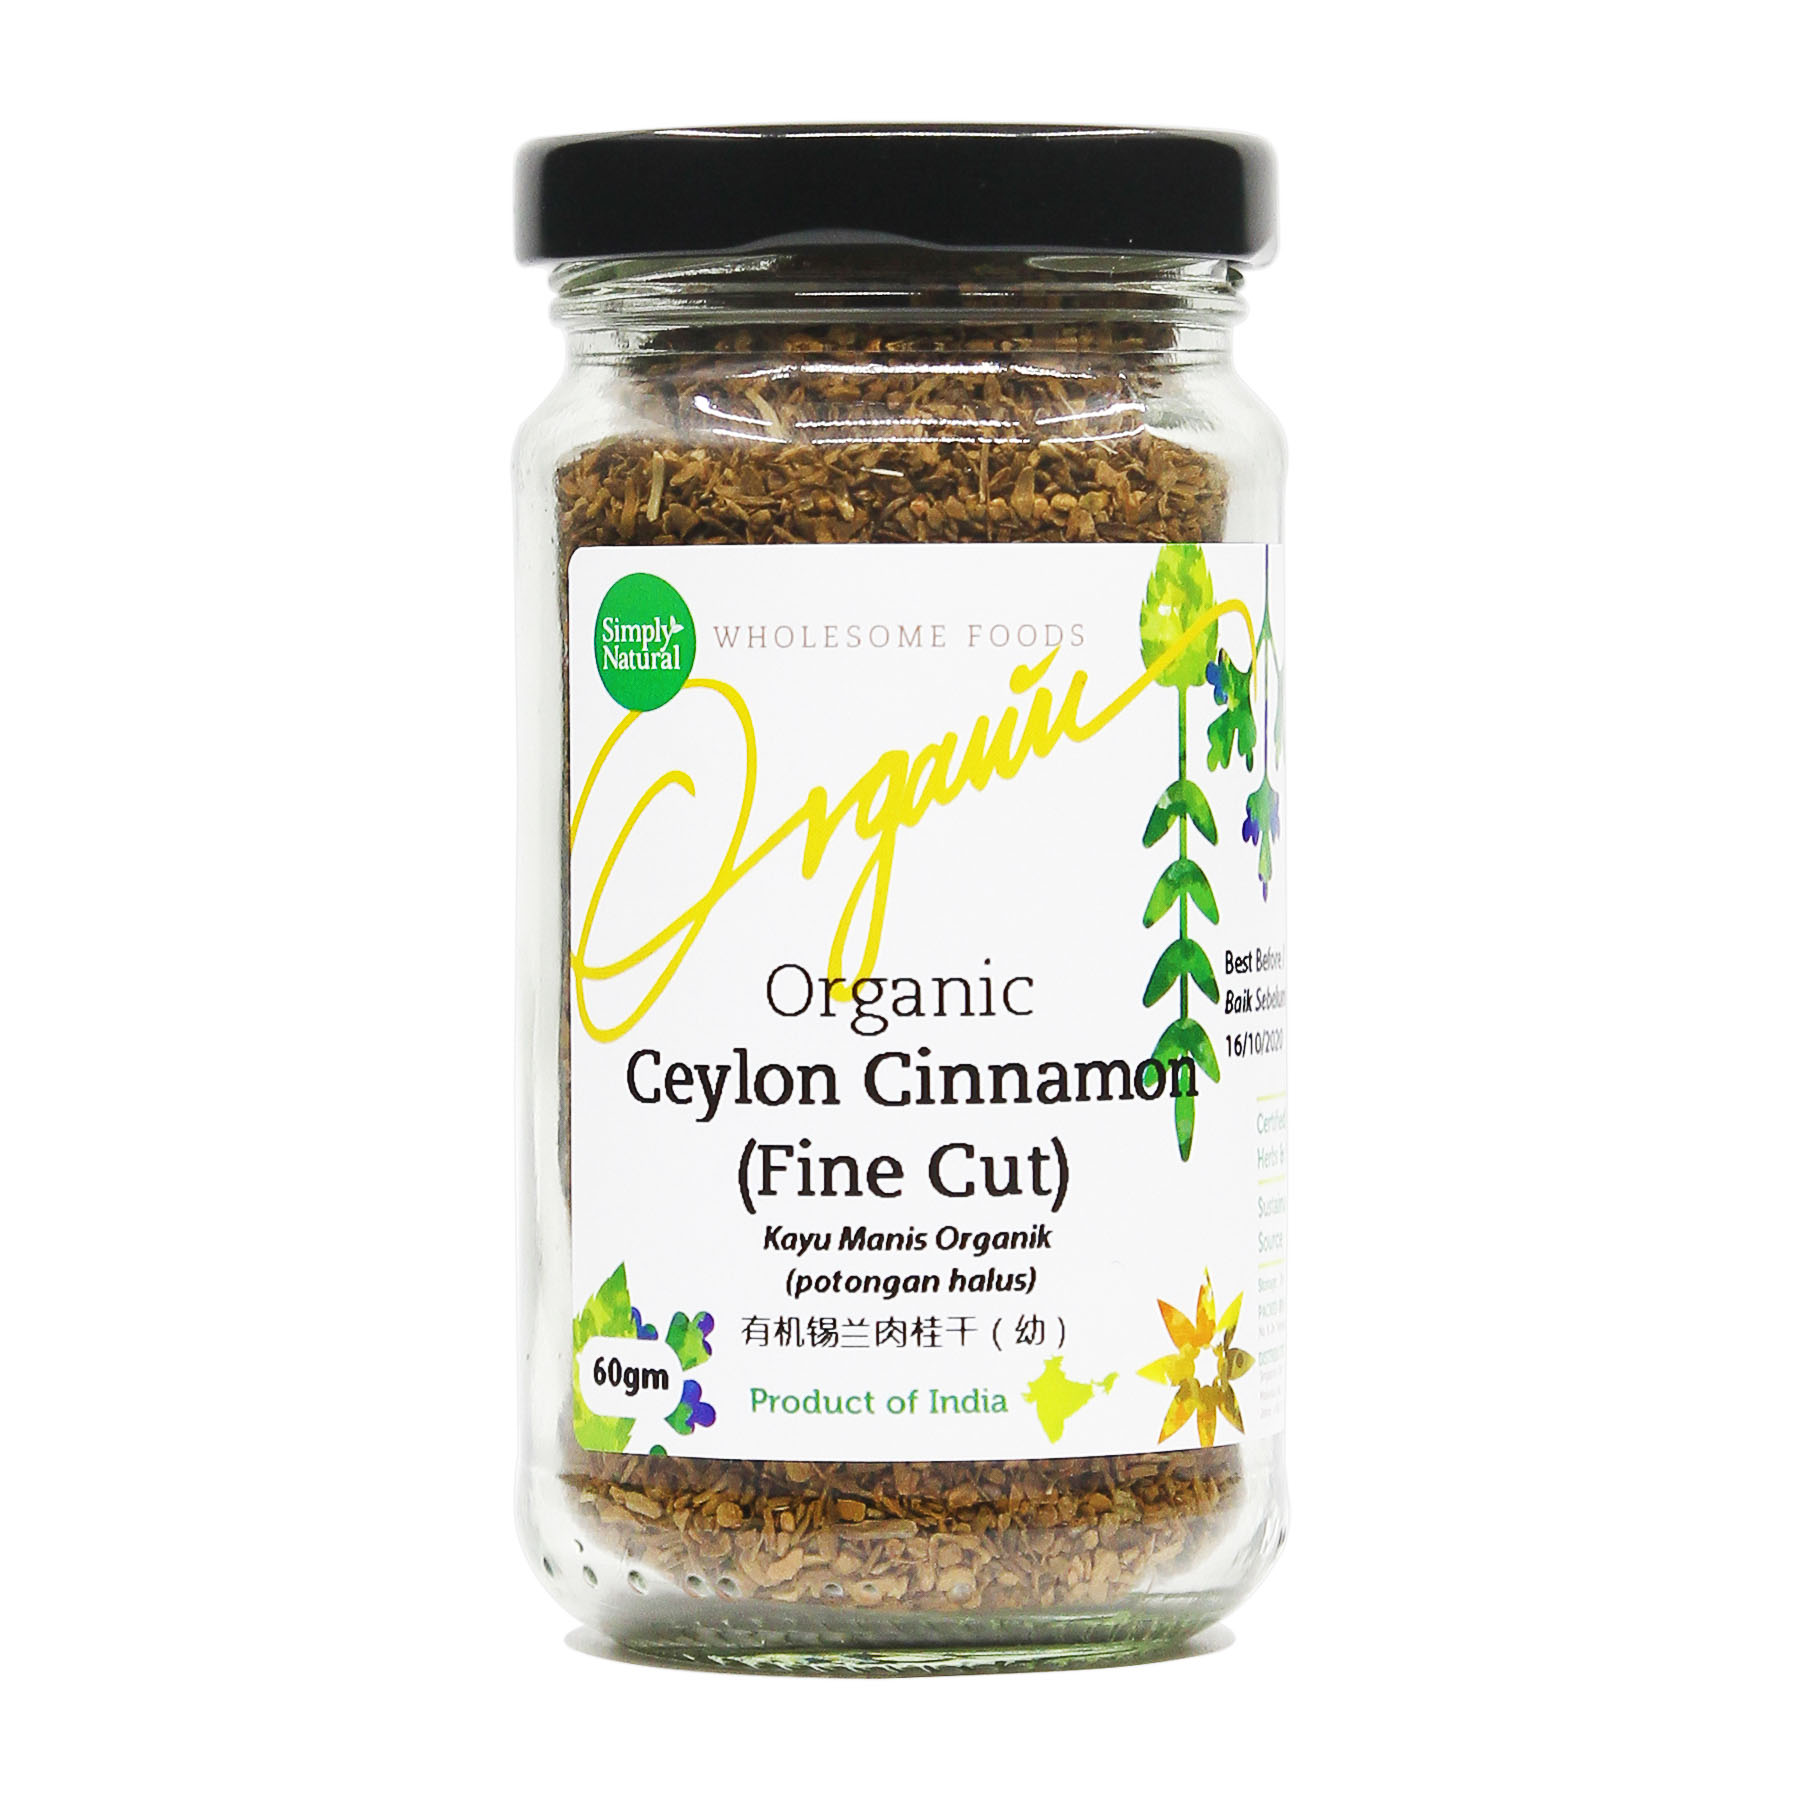 Simply Natural Organic Ceylon Cinnamon Fine Cut 60g Zenxin Singapore